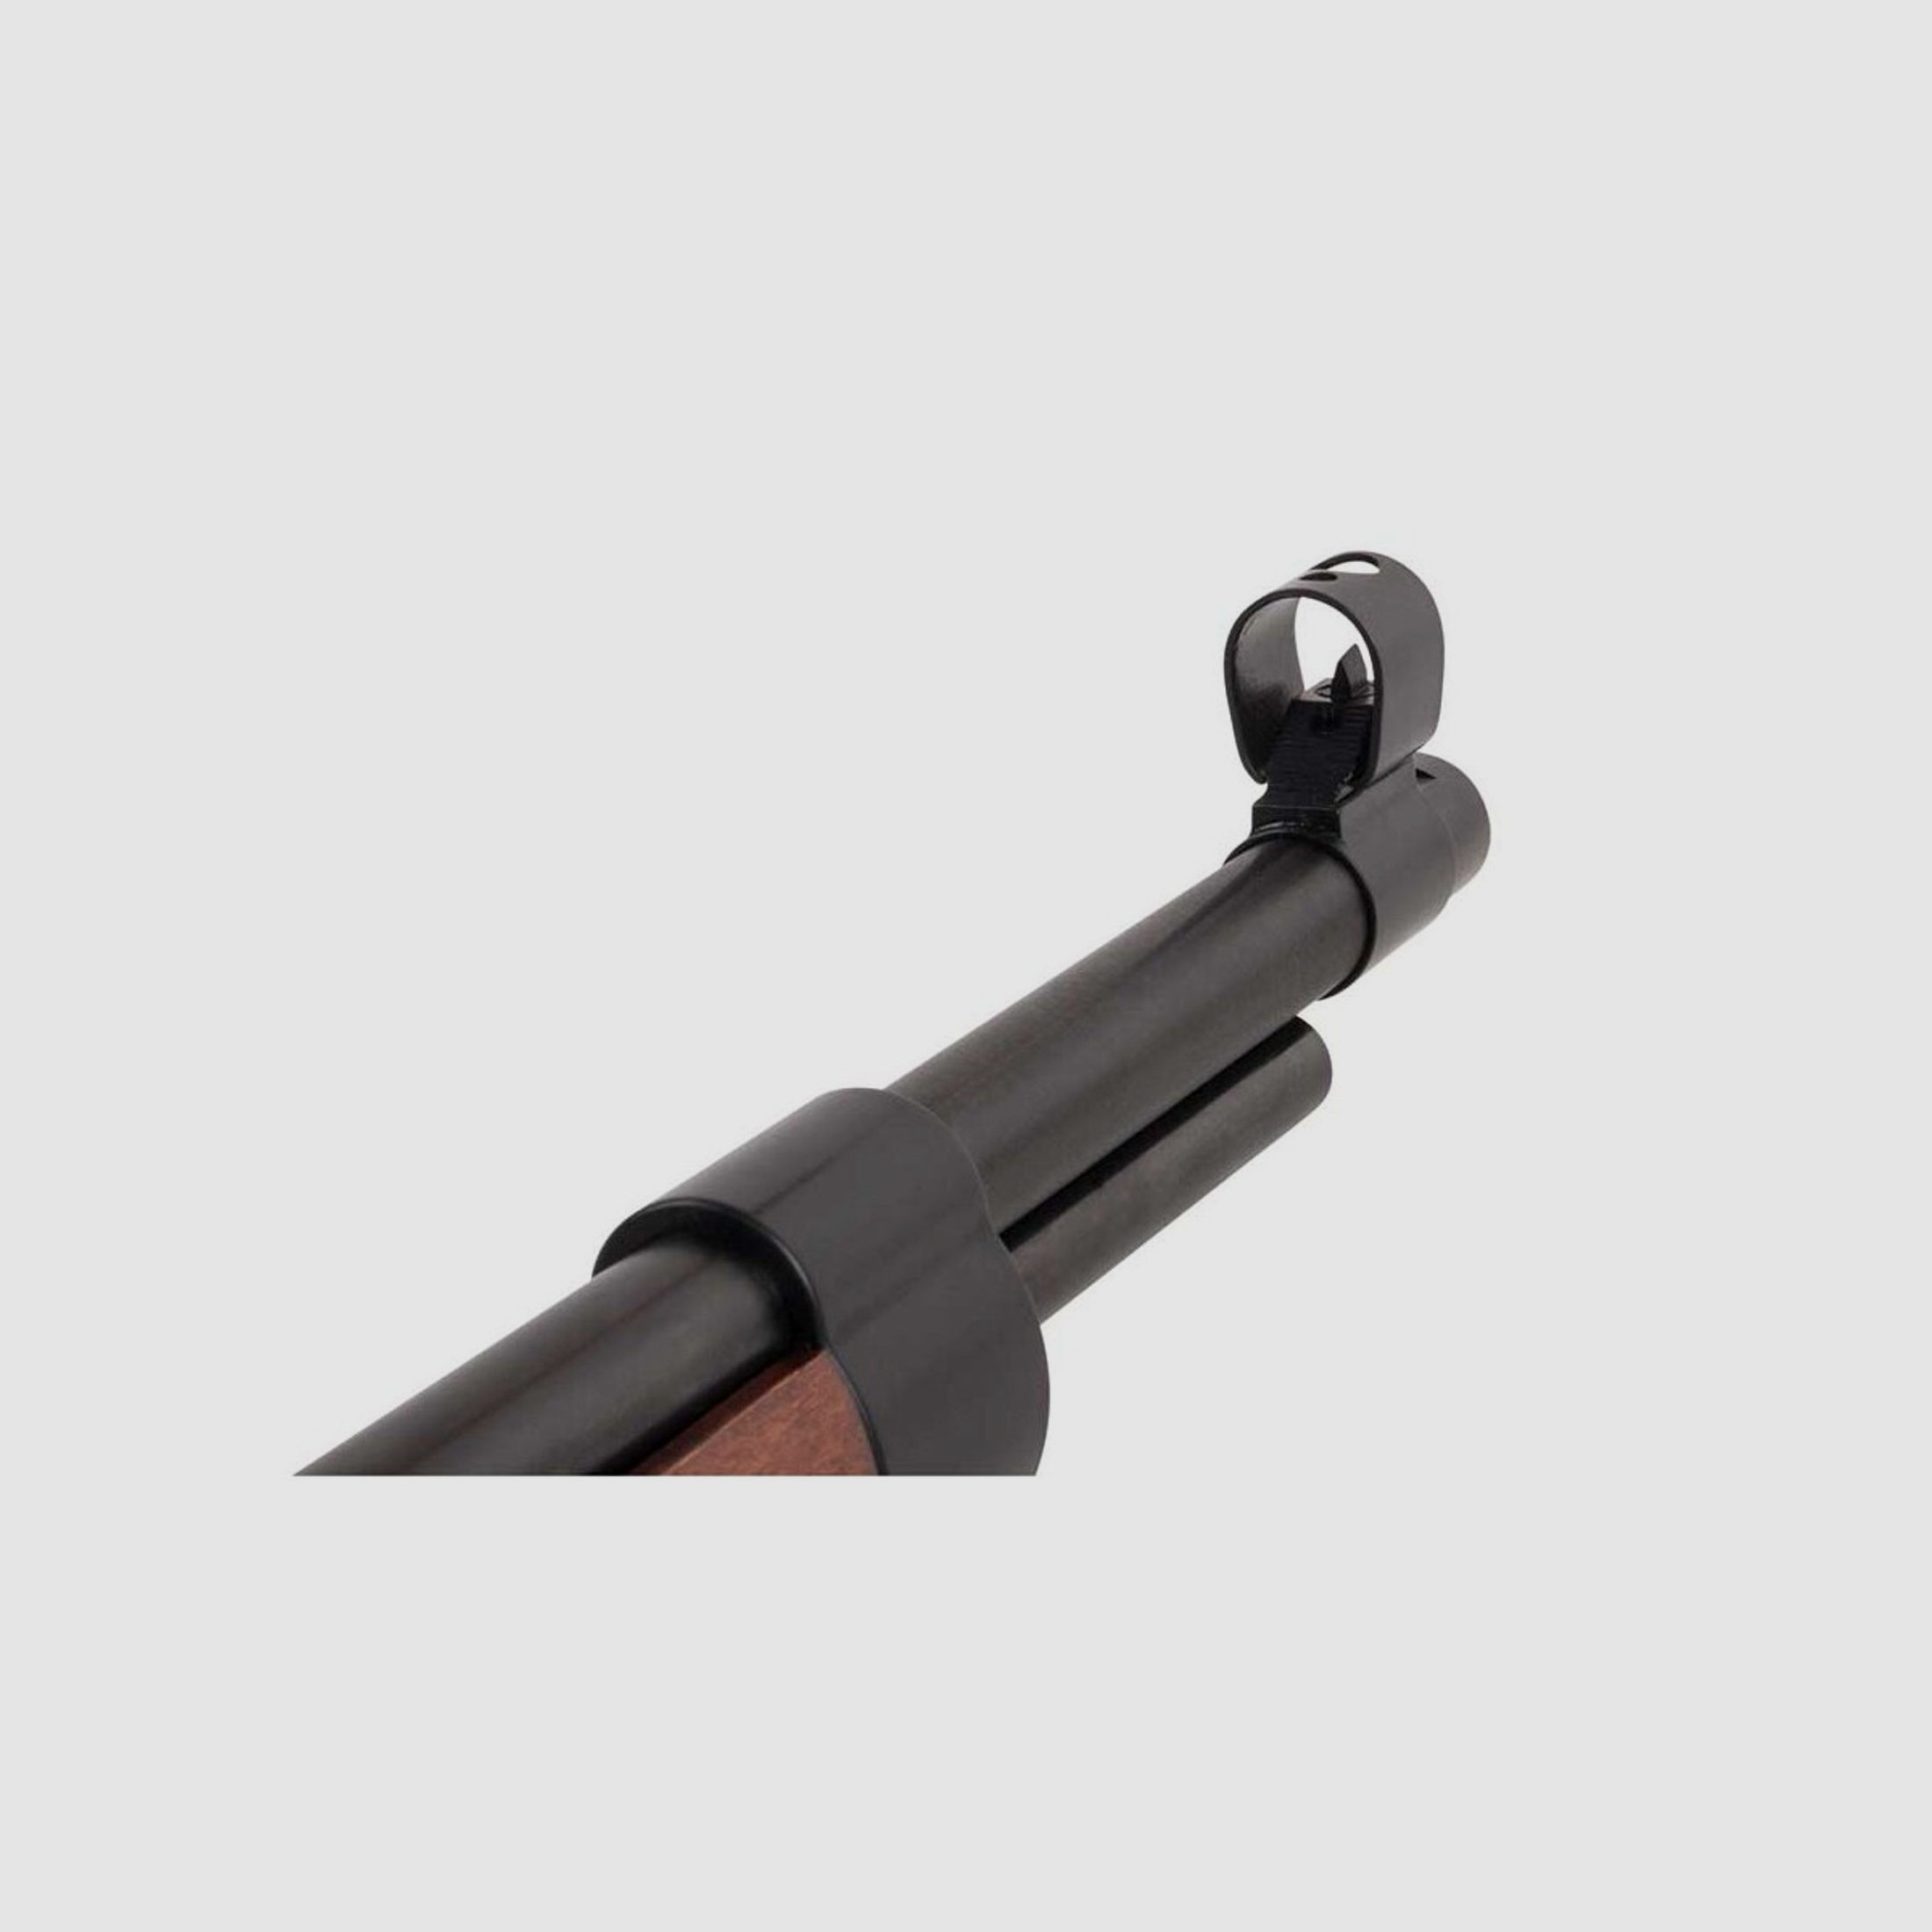 Mauser K98 Unterhebelspanner cal. 4,5 mm Diabolo